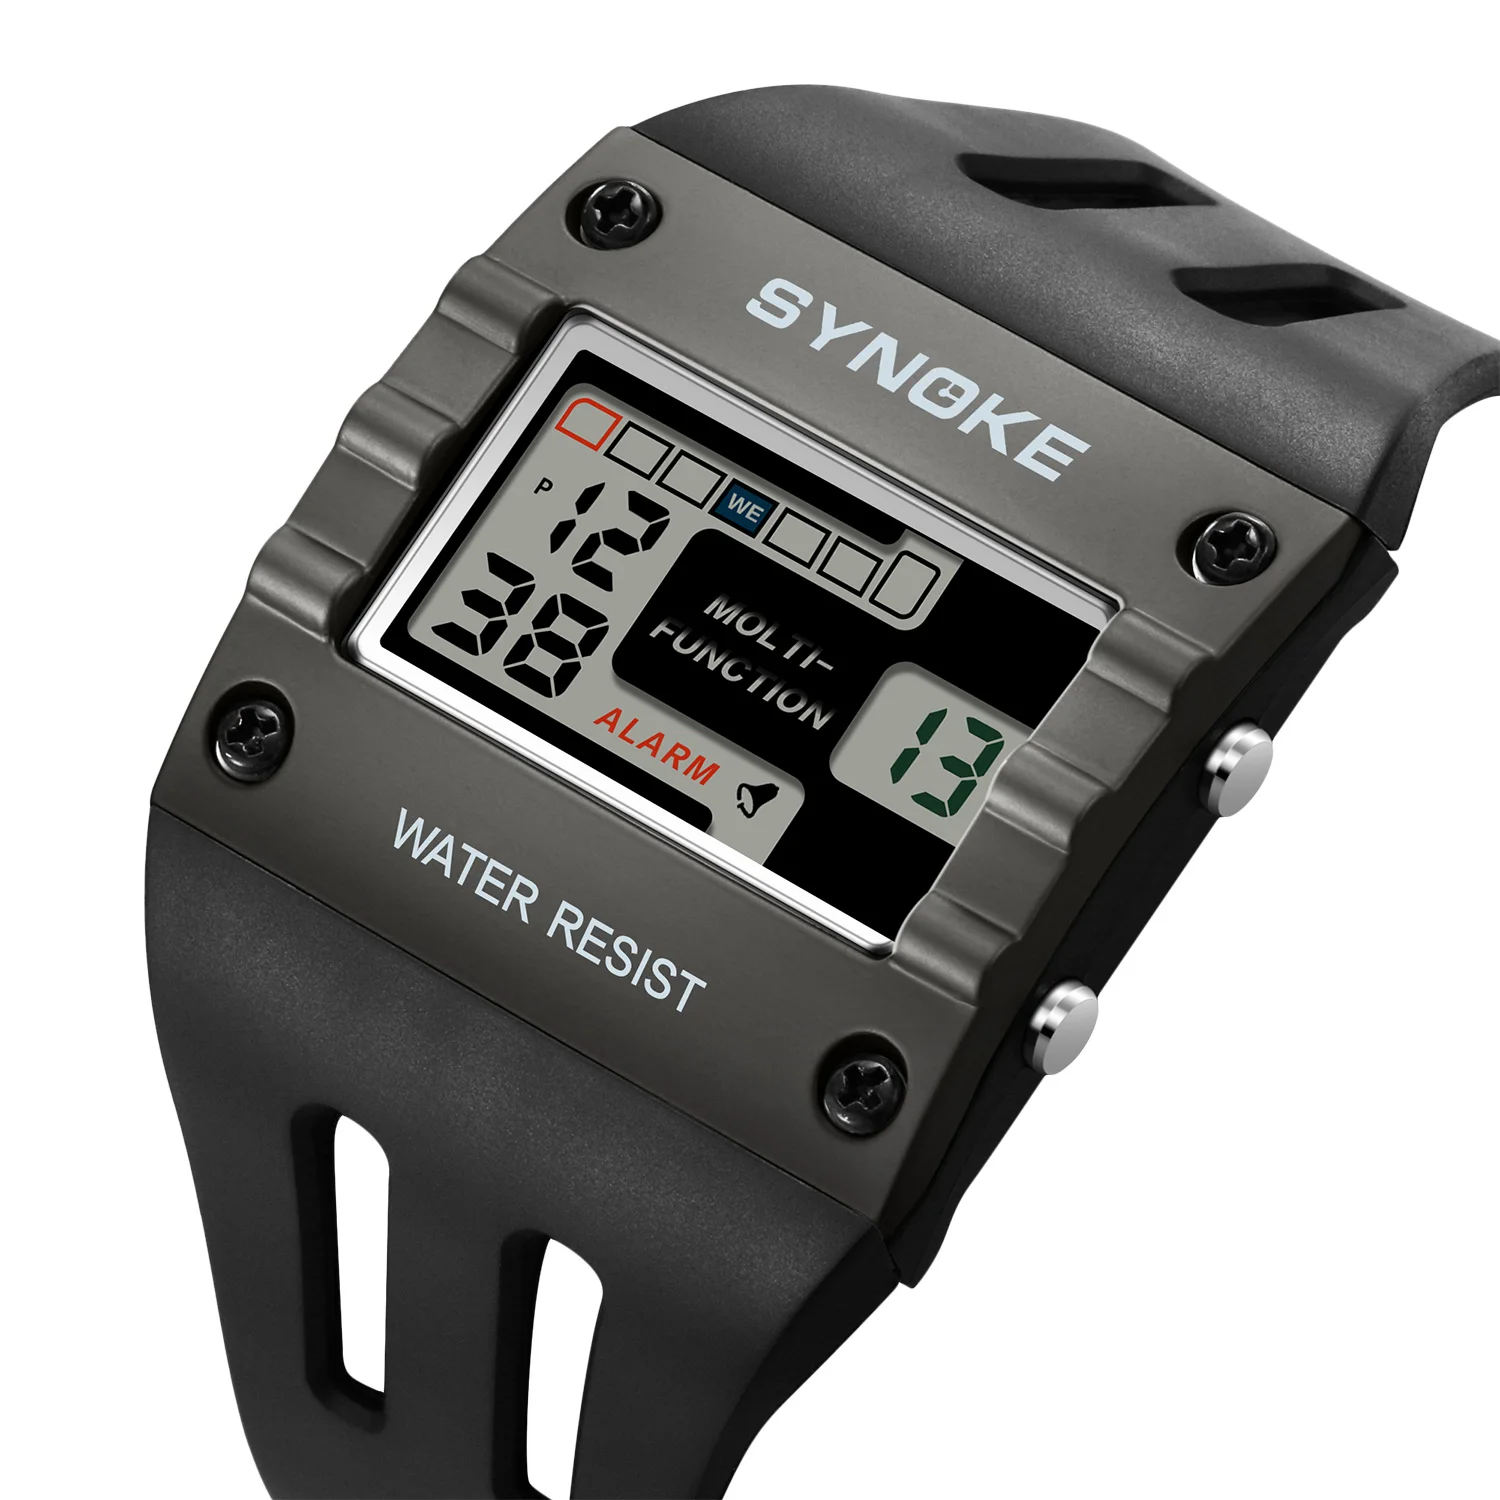 

SYNOKE Men's Electronic Watch, Fashion Outdoor Sports Multi-functional Men's Watch